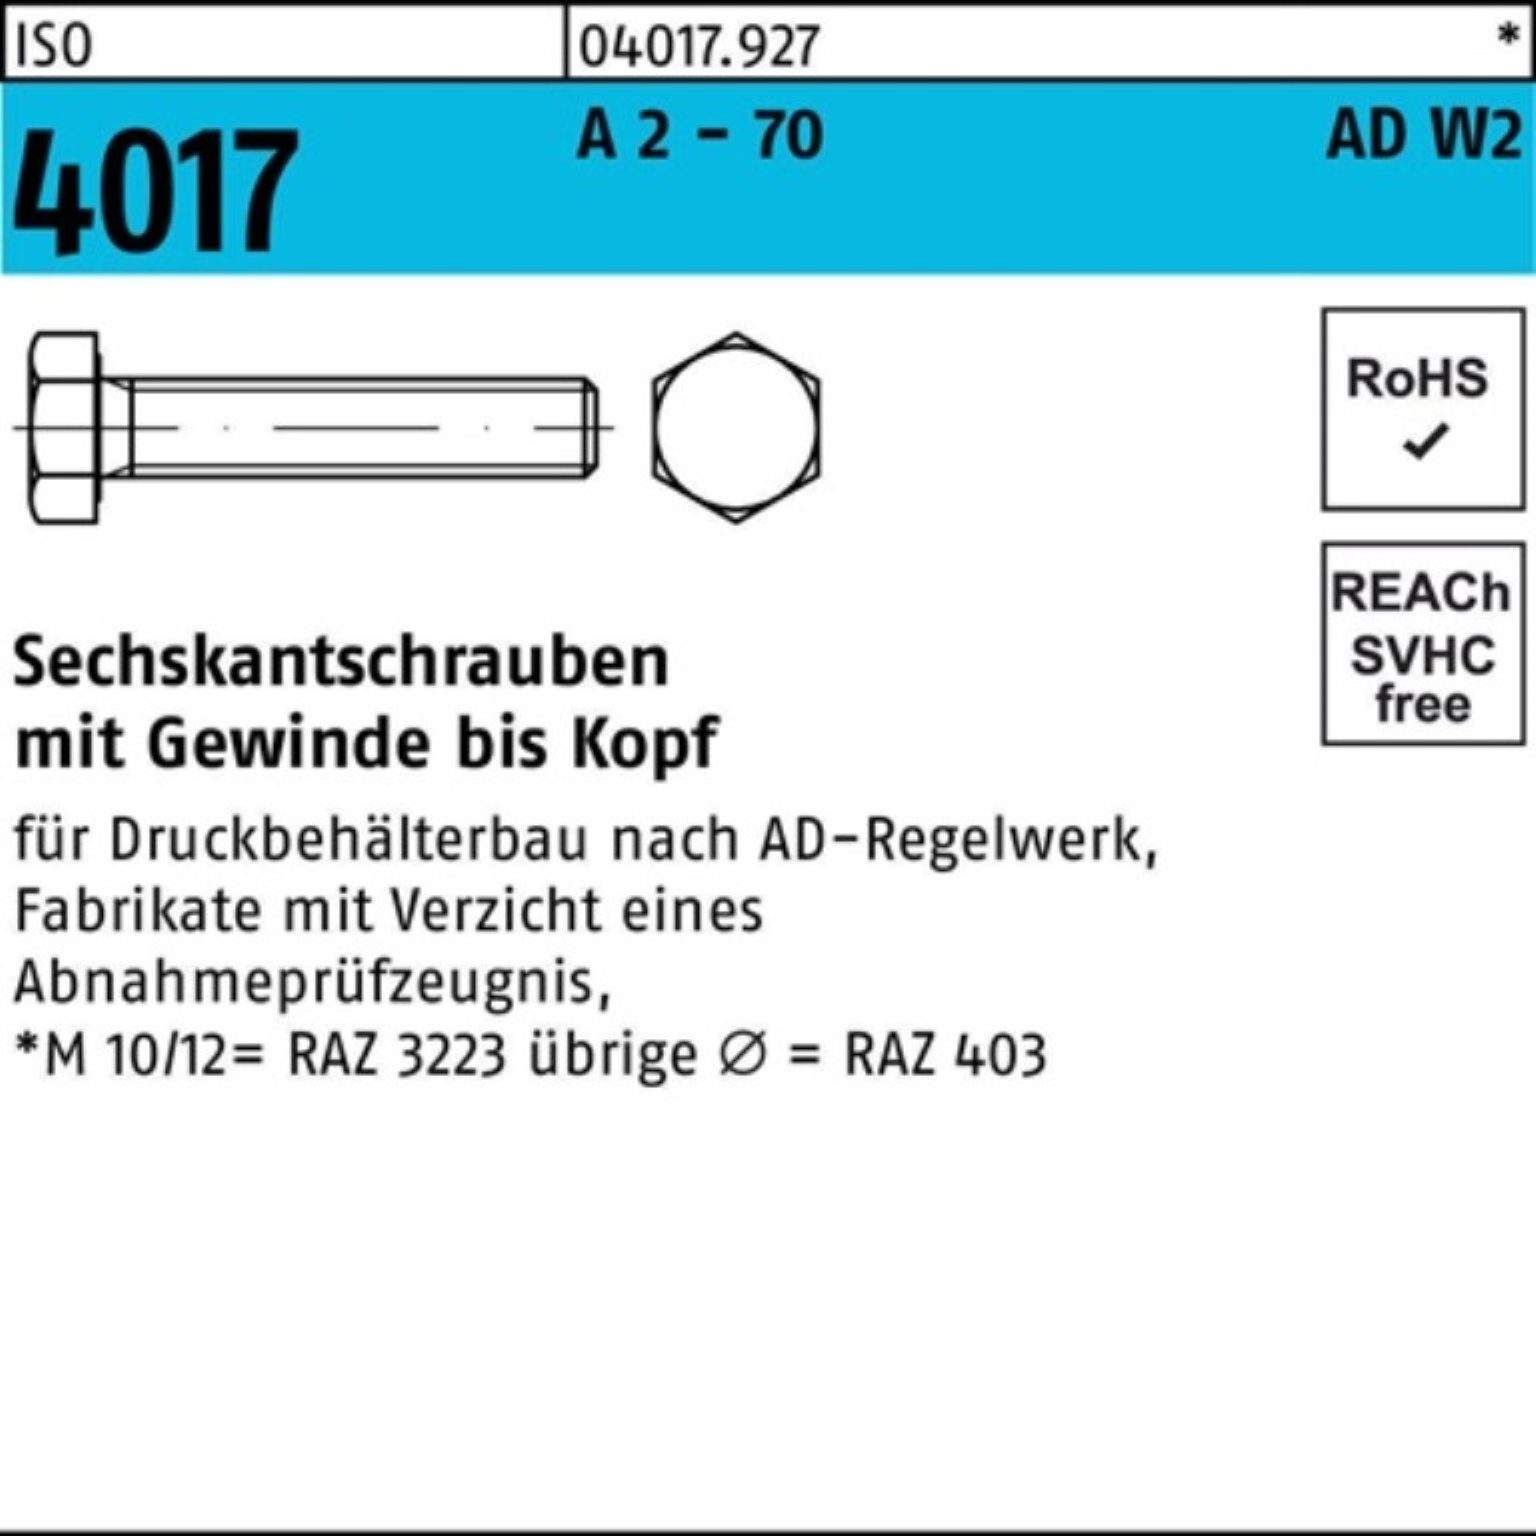 M20x Sechskantschraube - Pack ISO A AD-W2 100er 70 Bufab 25 70 4017 St VG 2 Sechskantschraube